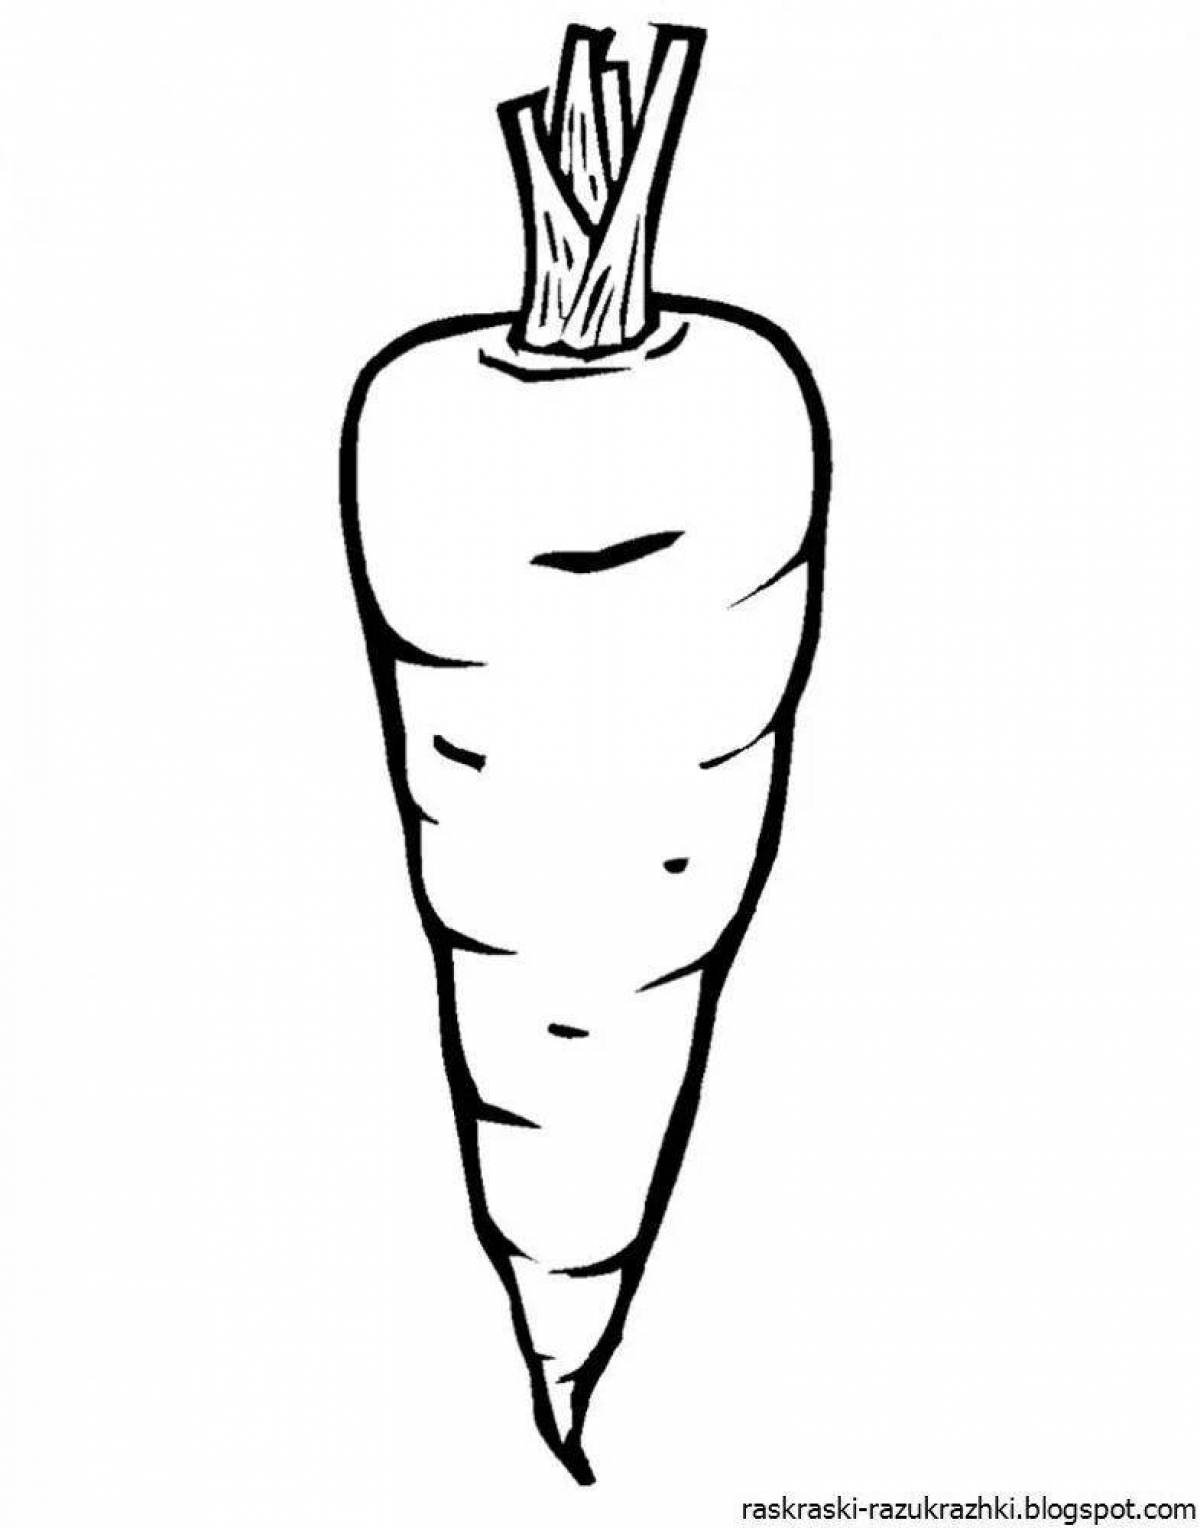 Illustration of abundant carrots